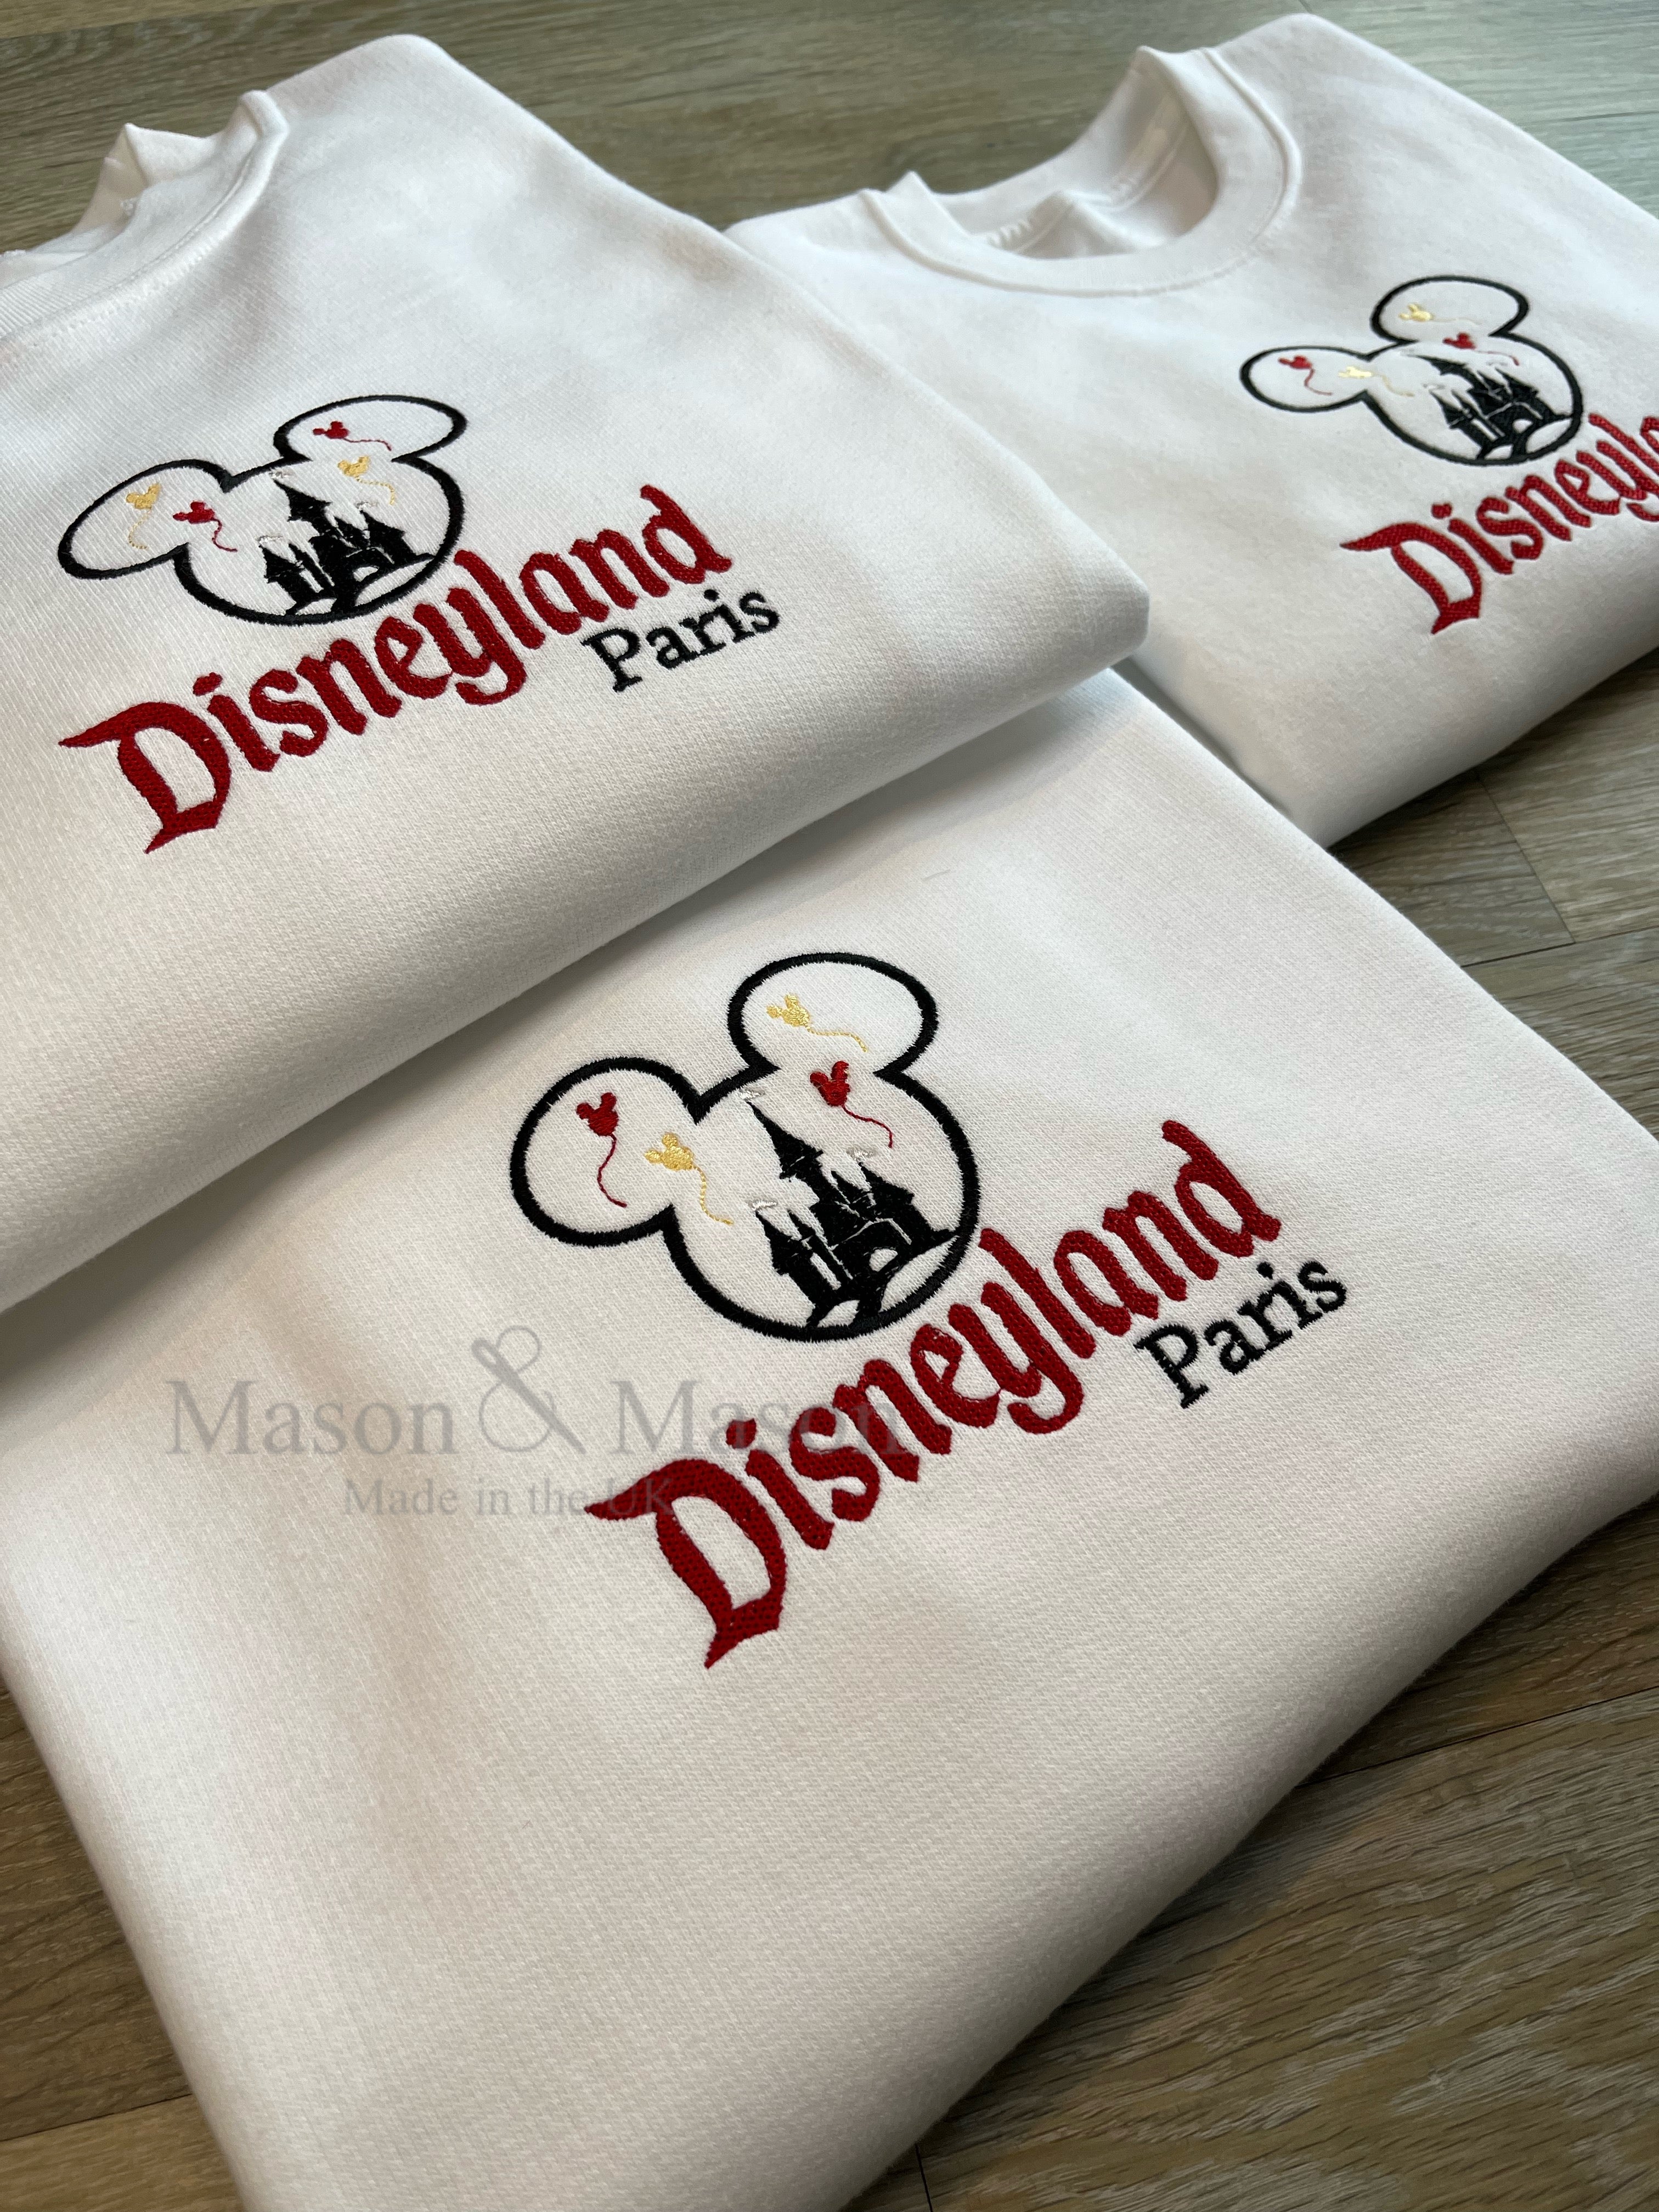 DISNEY - The Disneyland Sweatshirt